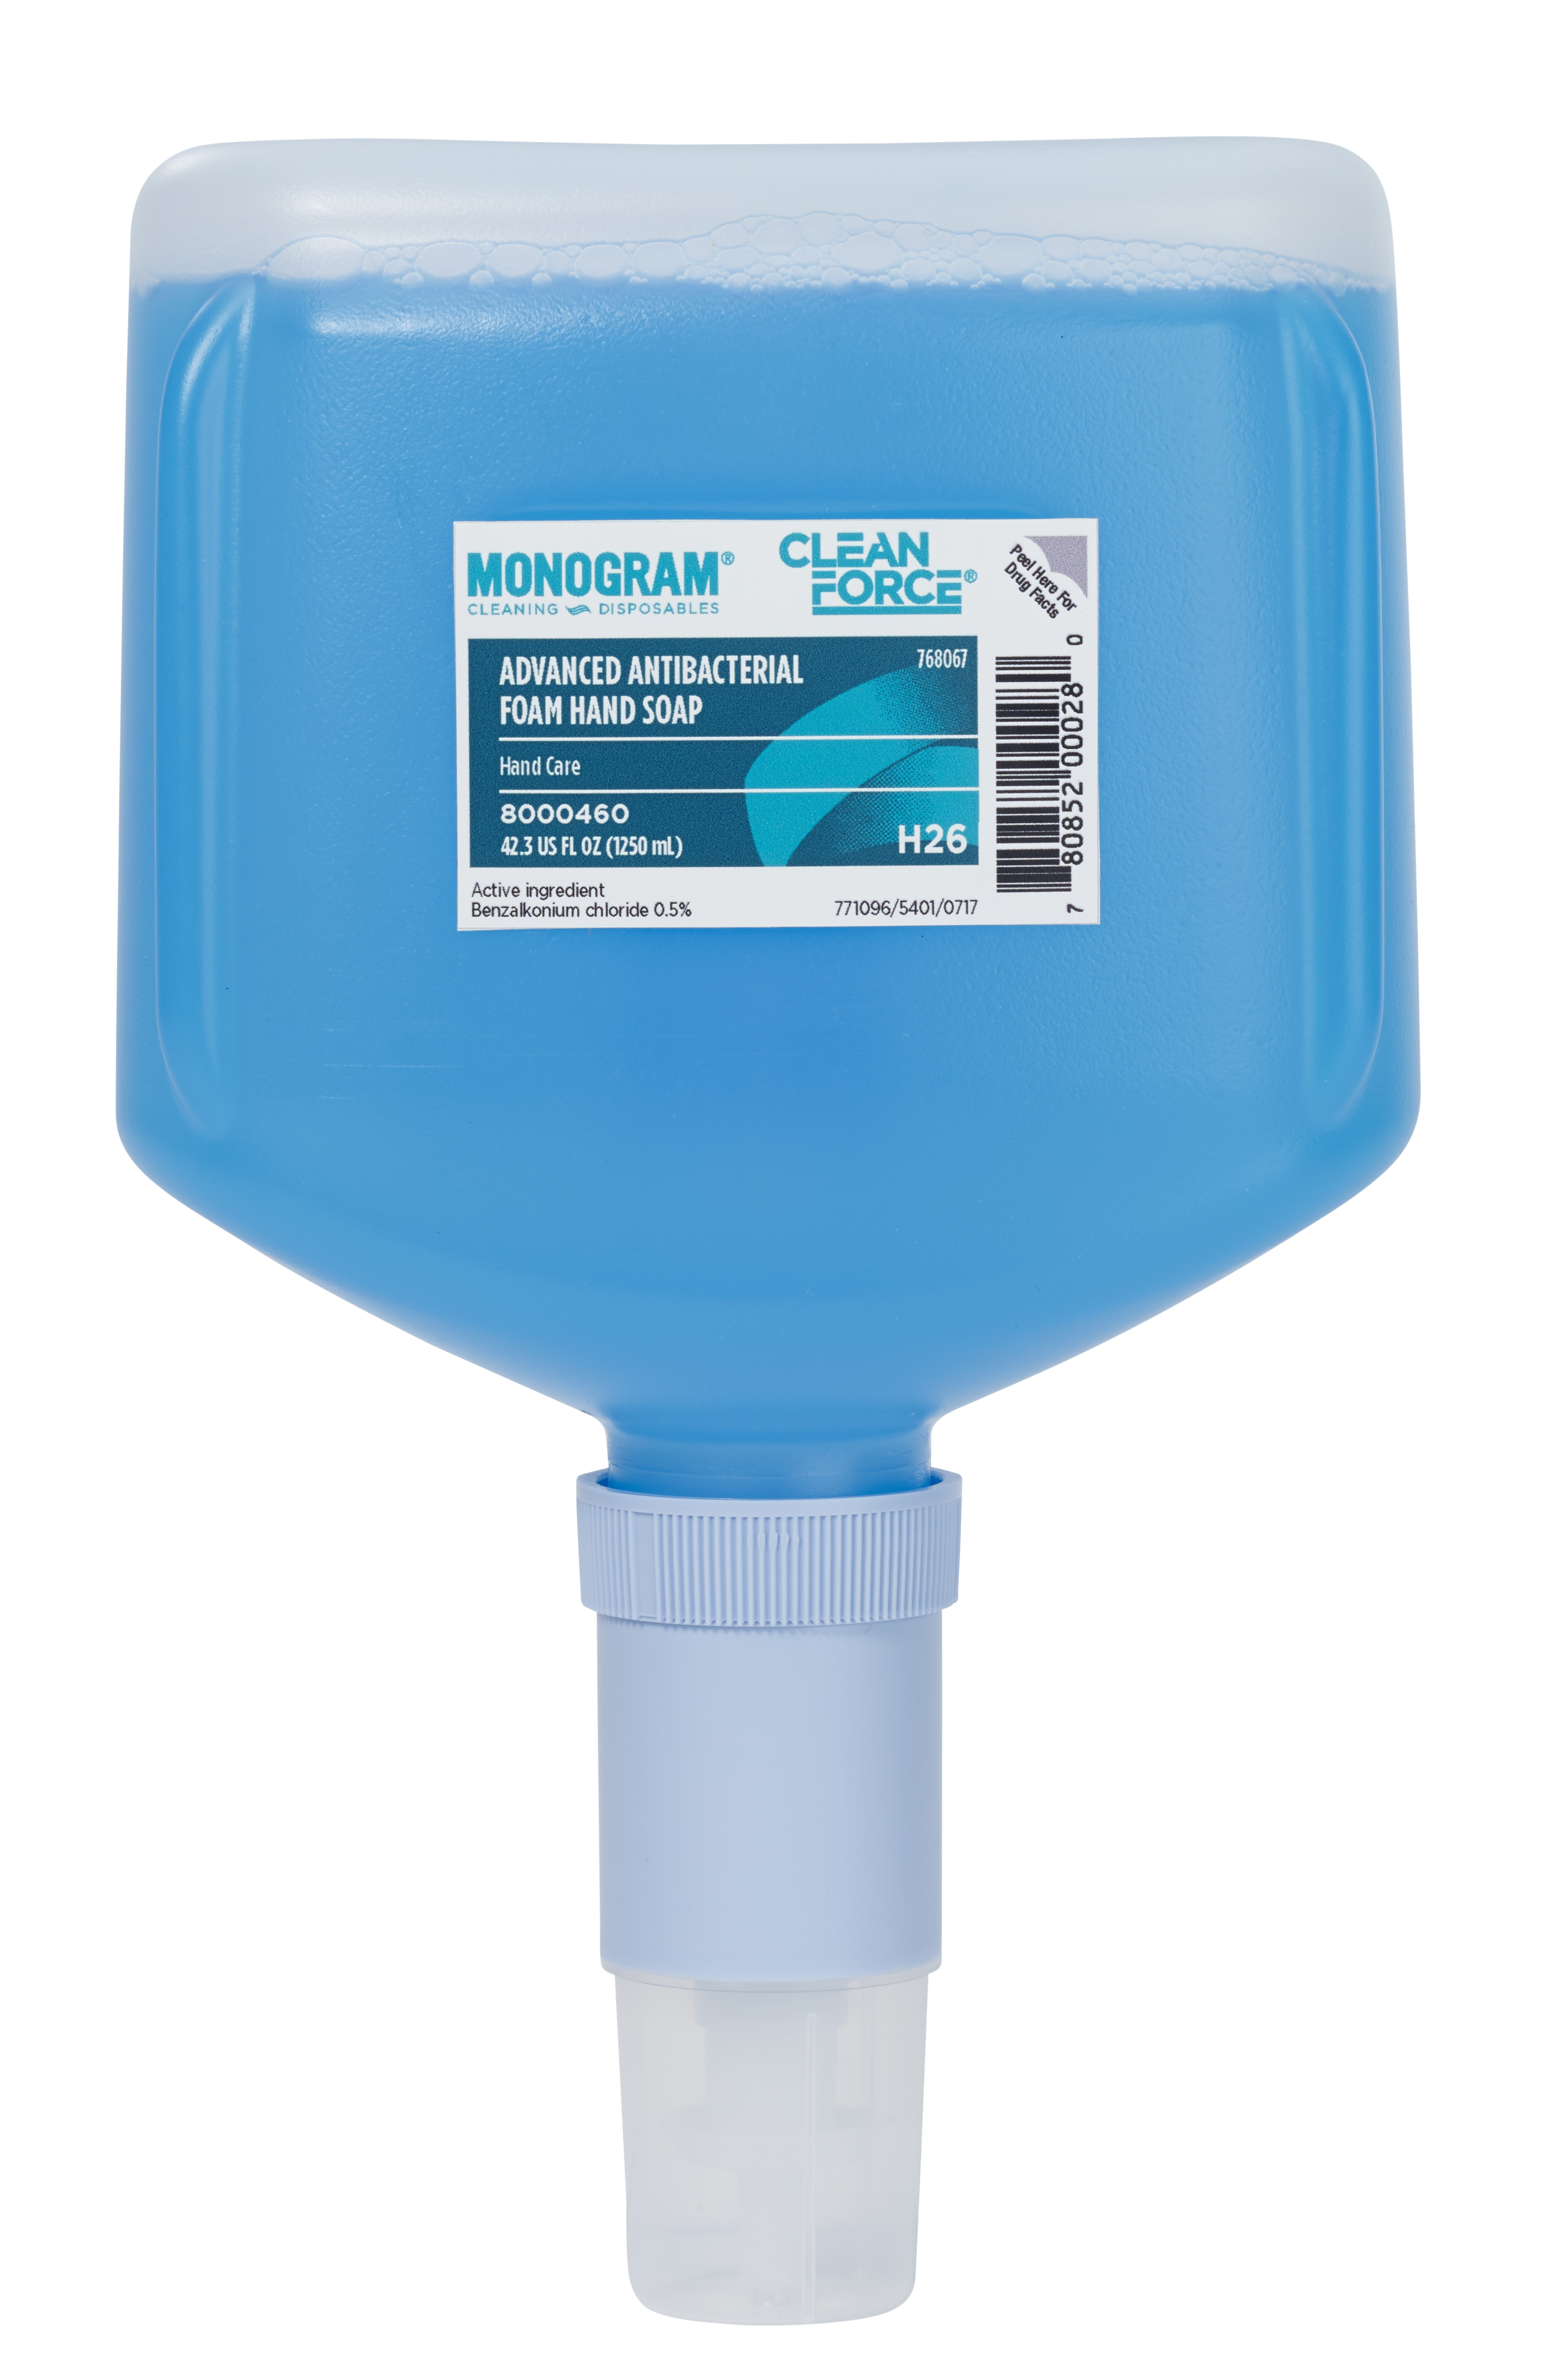 Monogram Clean Force Advanced Antibacterial Foam Hand Soap 1250 ML